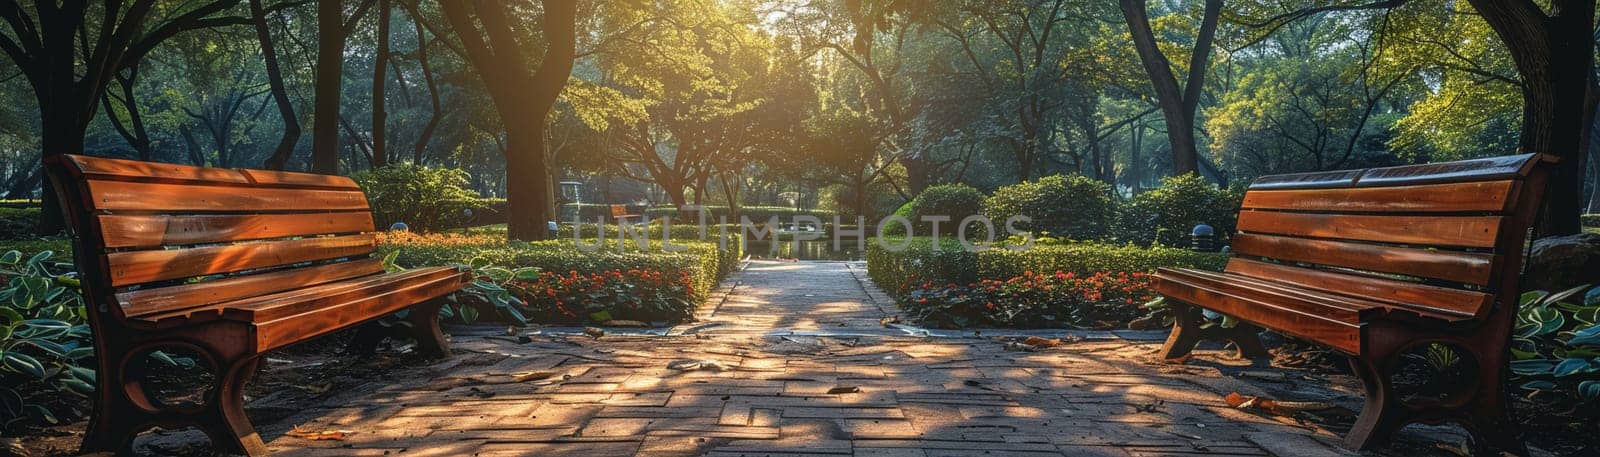 Serene Public Garden Invites Business Professionals to Unwind by Benzoix